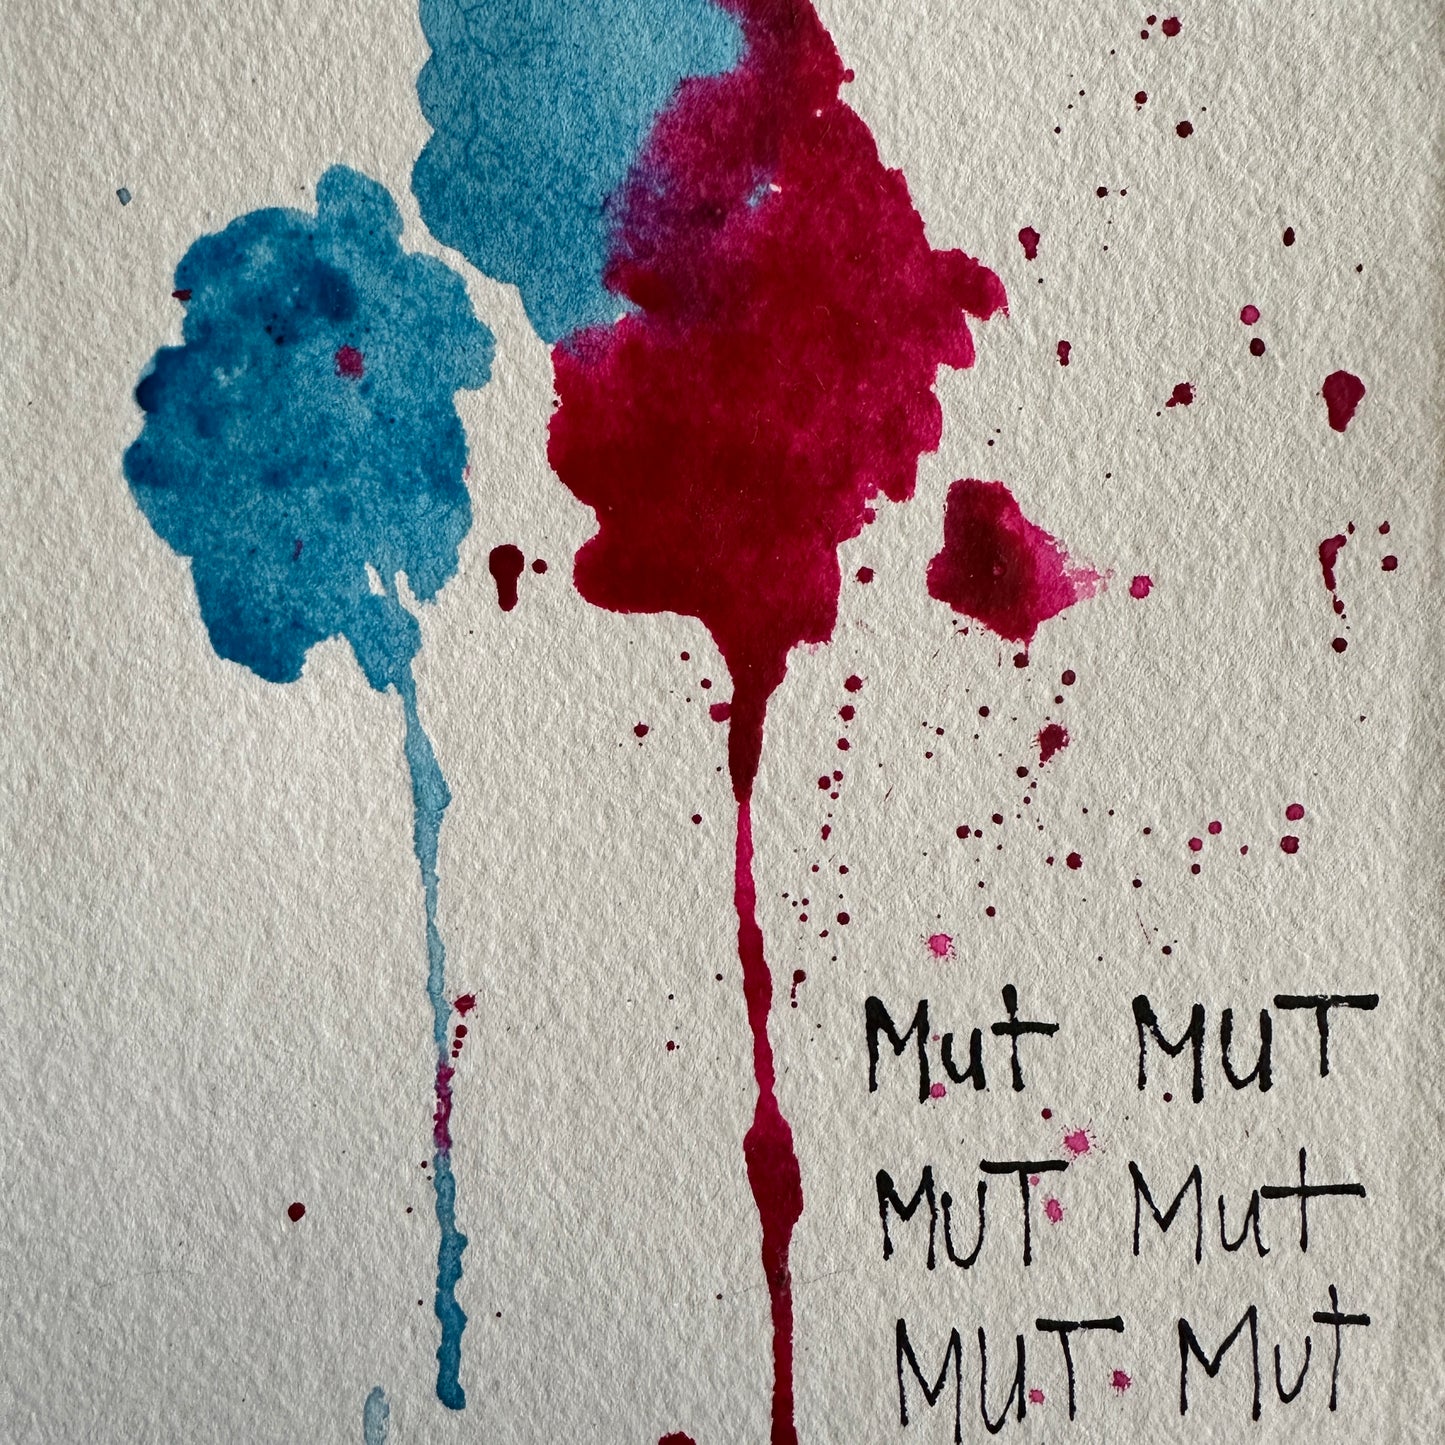 Mut-Paper #19